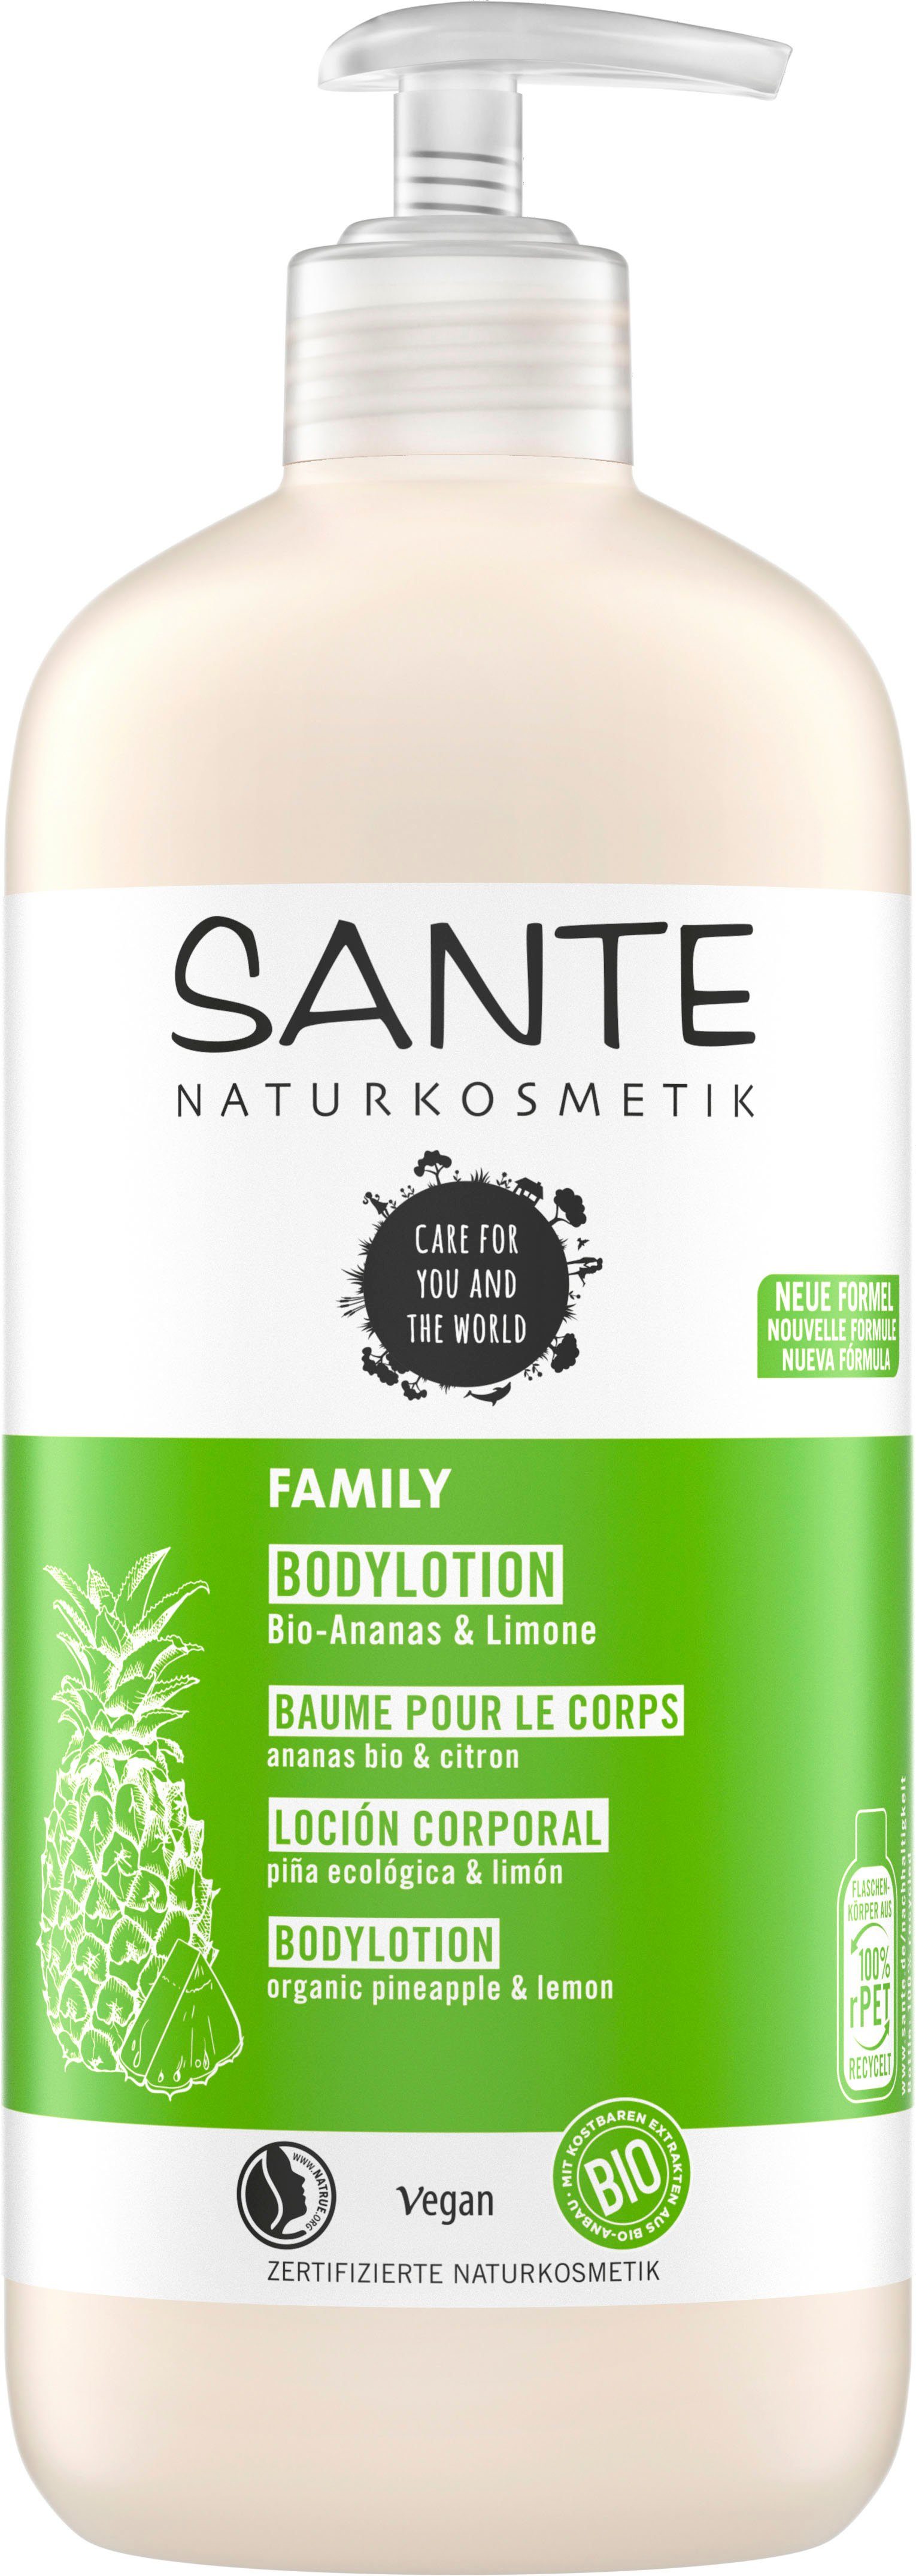 Sante Bodylotion Family Bodylotion SANTE